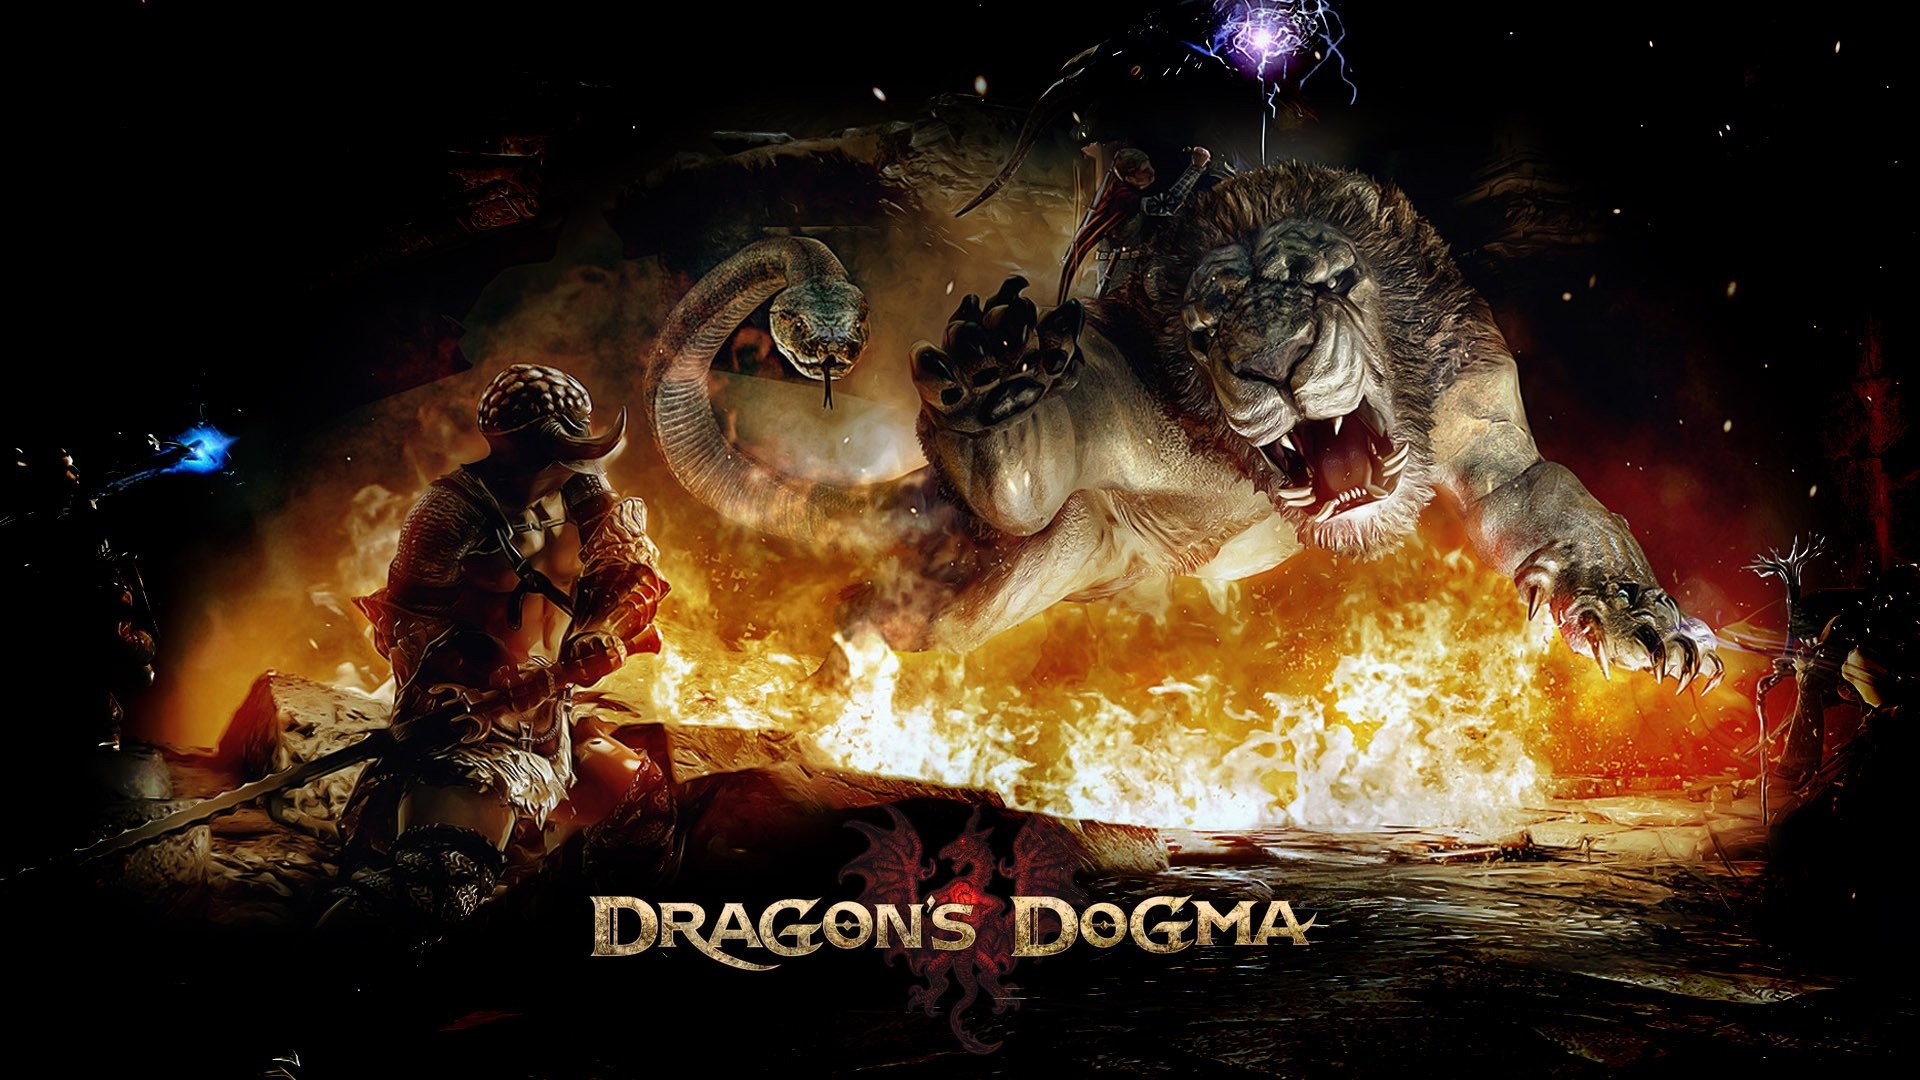 Dragons Dogma Netflix 2021 Wallpapers